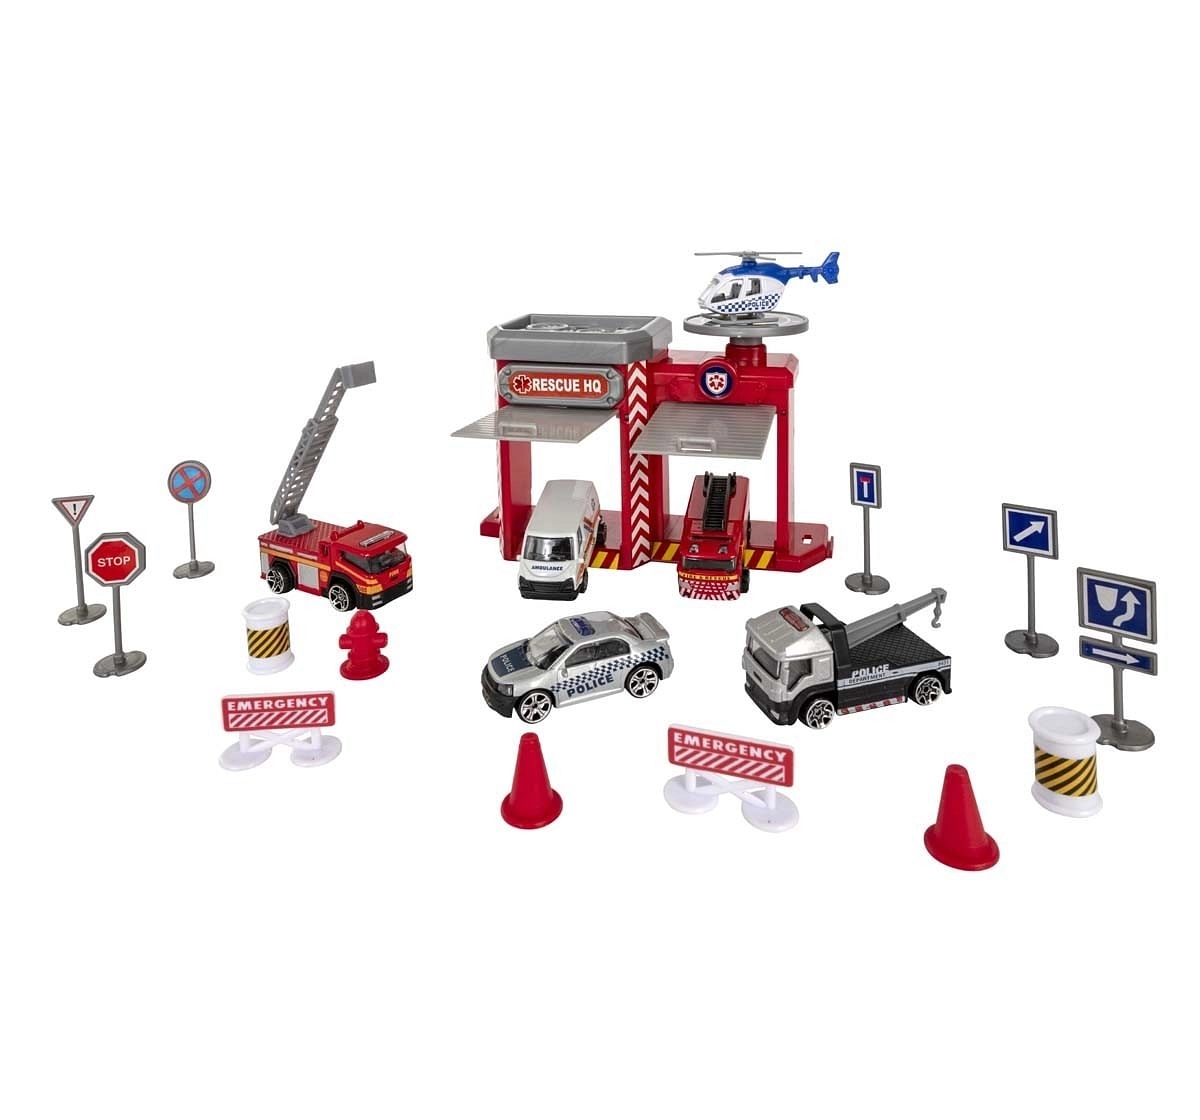 Teamsterz 3" Die Cast Emergency Station Play Set Vehicles for Kids Age 3Y+